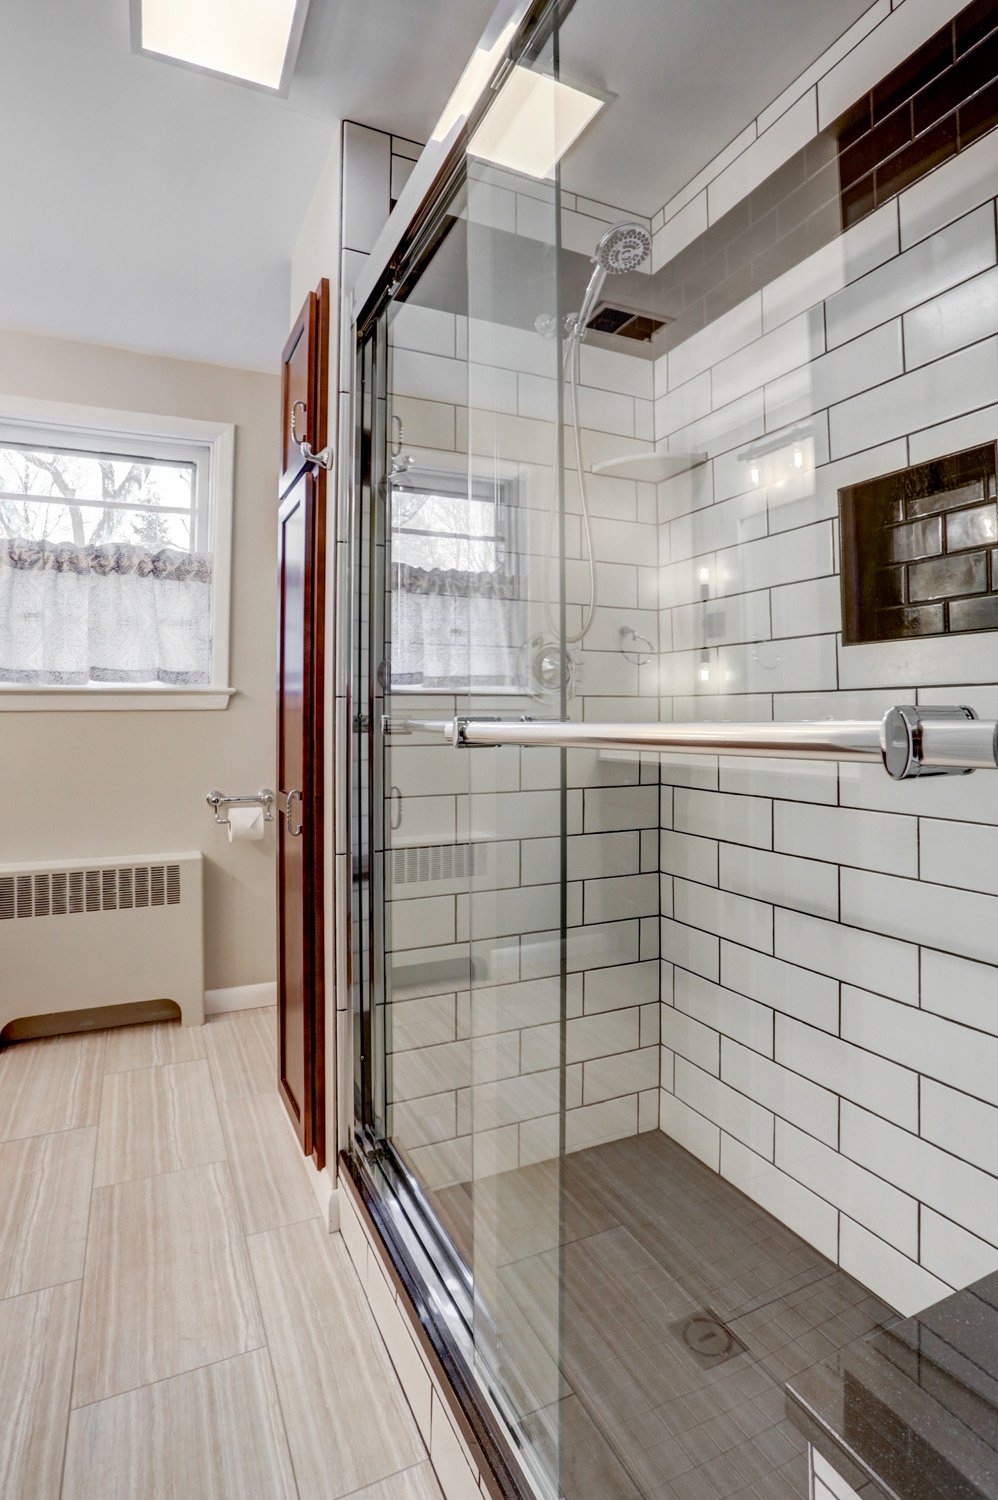 Manheim Township Bathroom Remodel with Ceramic Tile shower